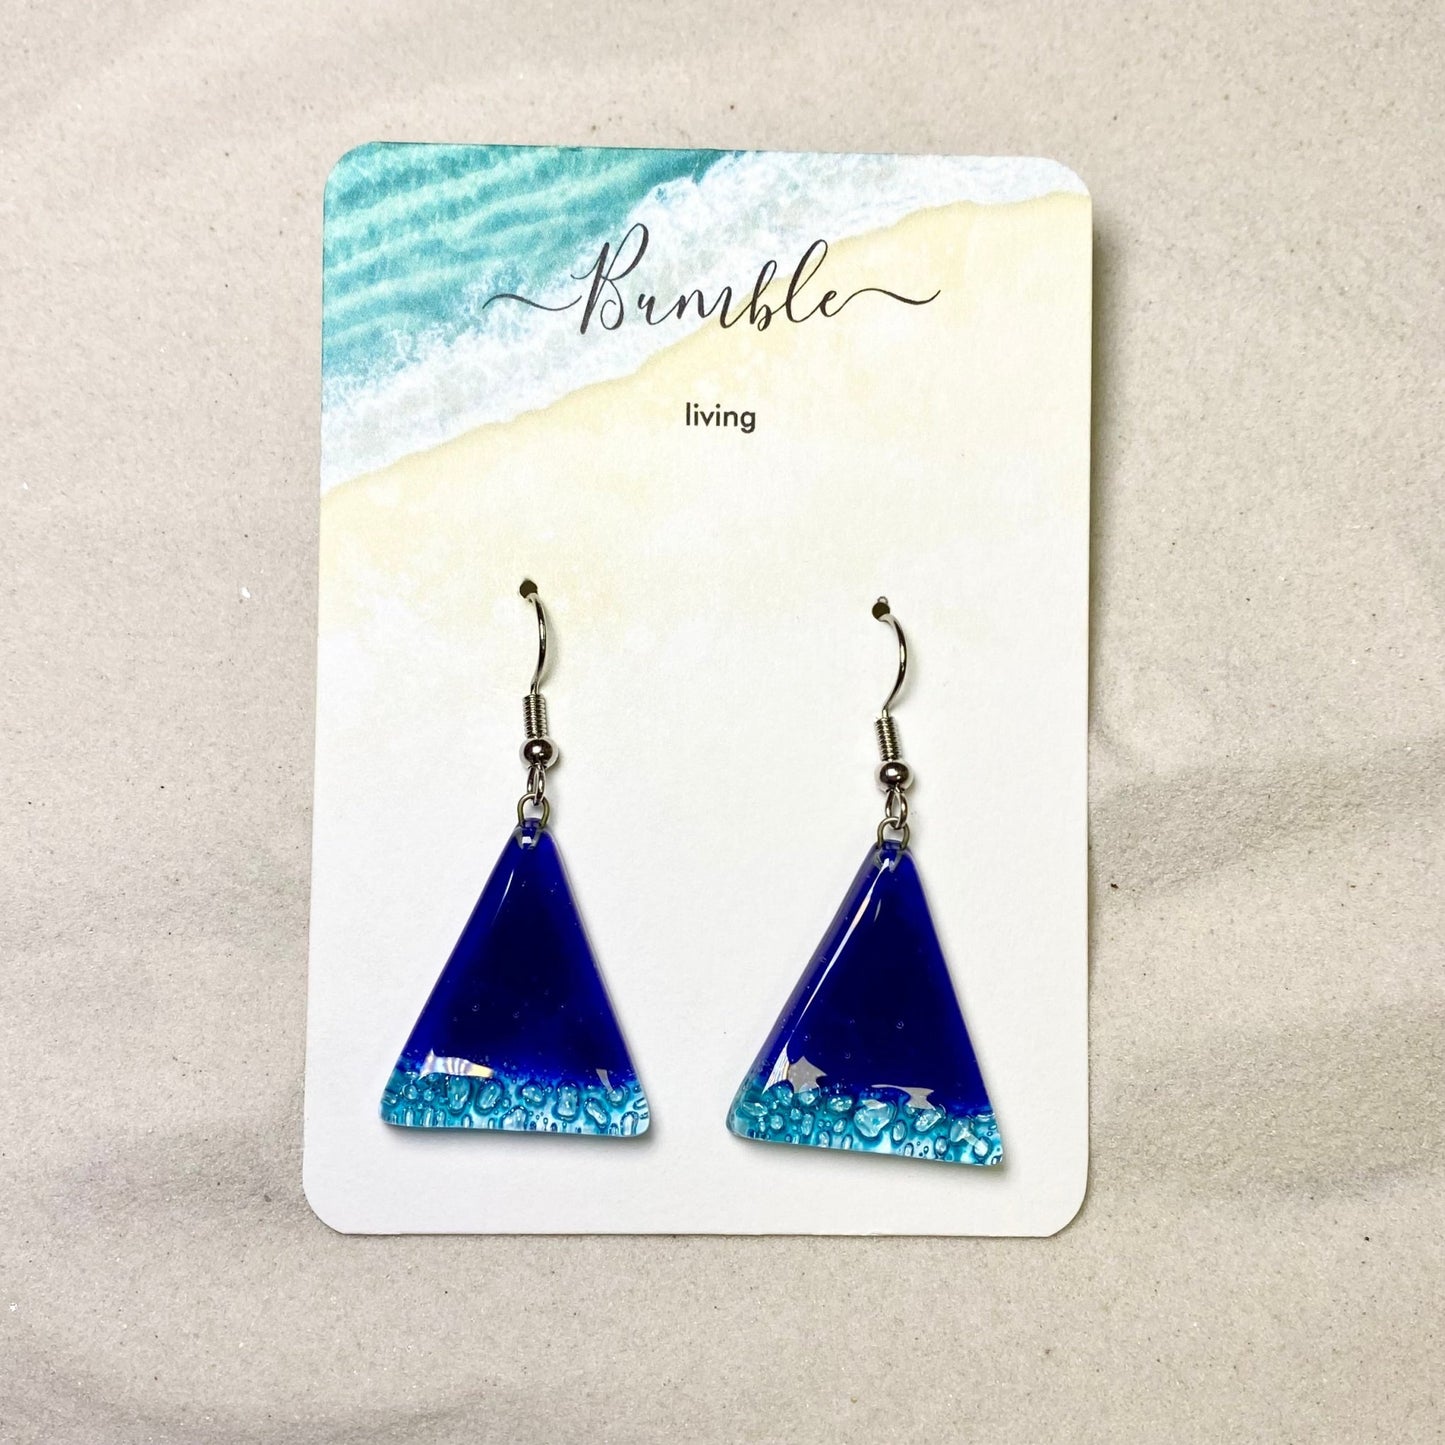 Blue & Sea Blue Bubble Triangular Shape Drop Earrings - Bumble Living